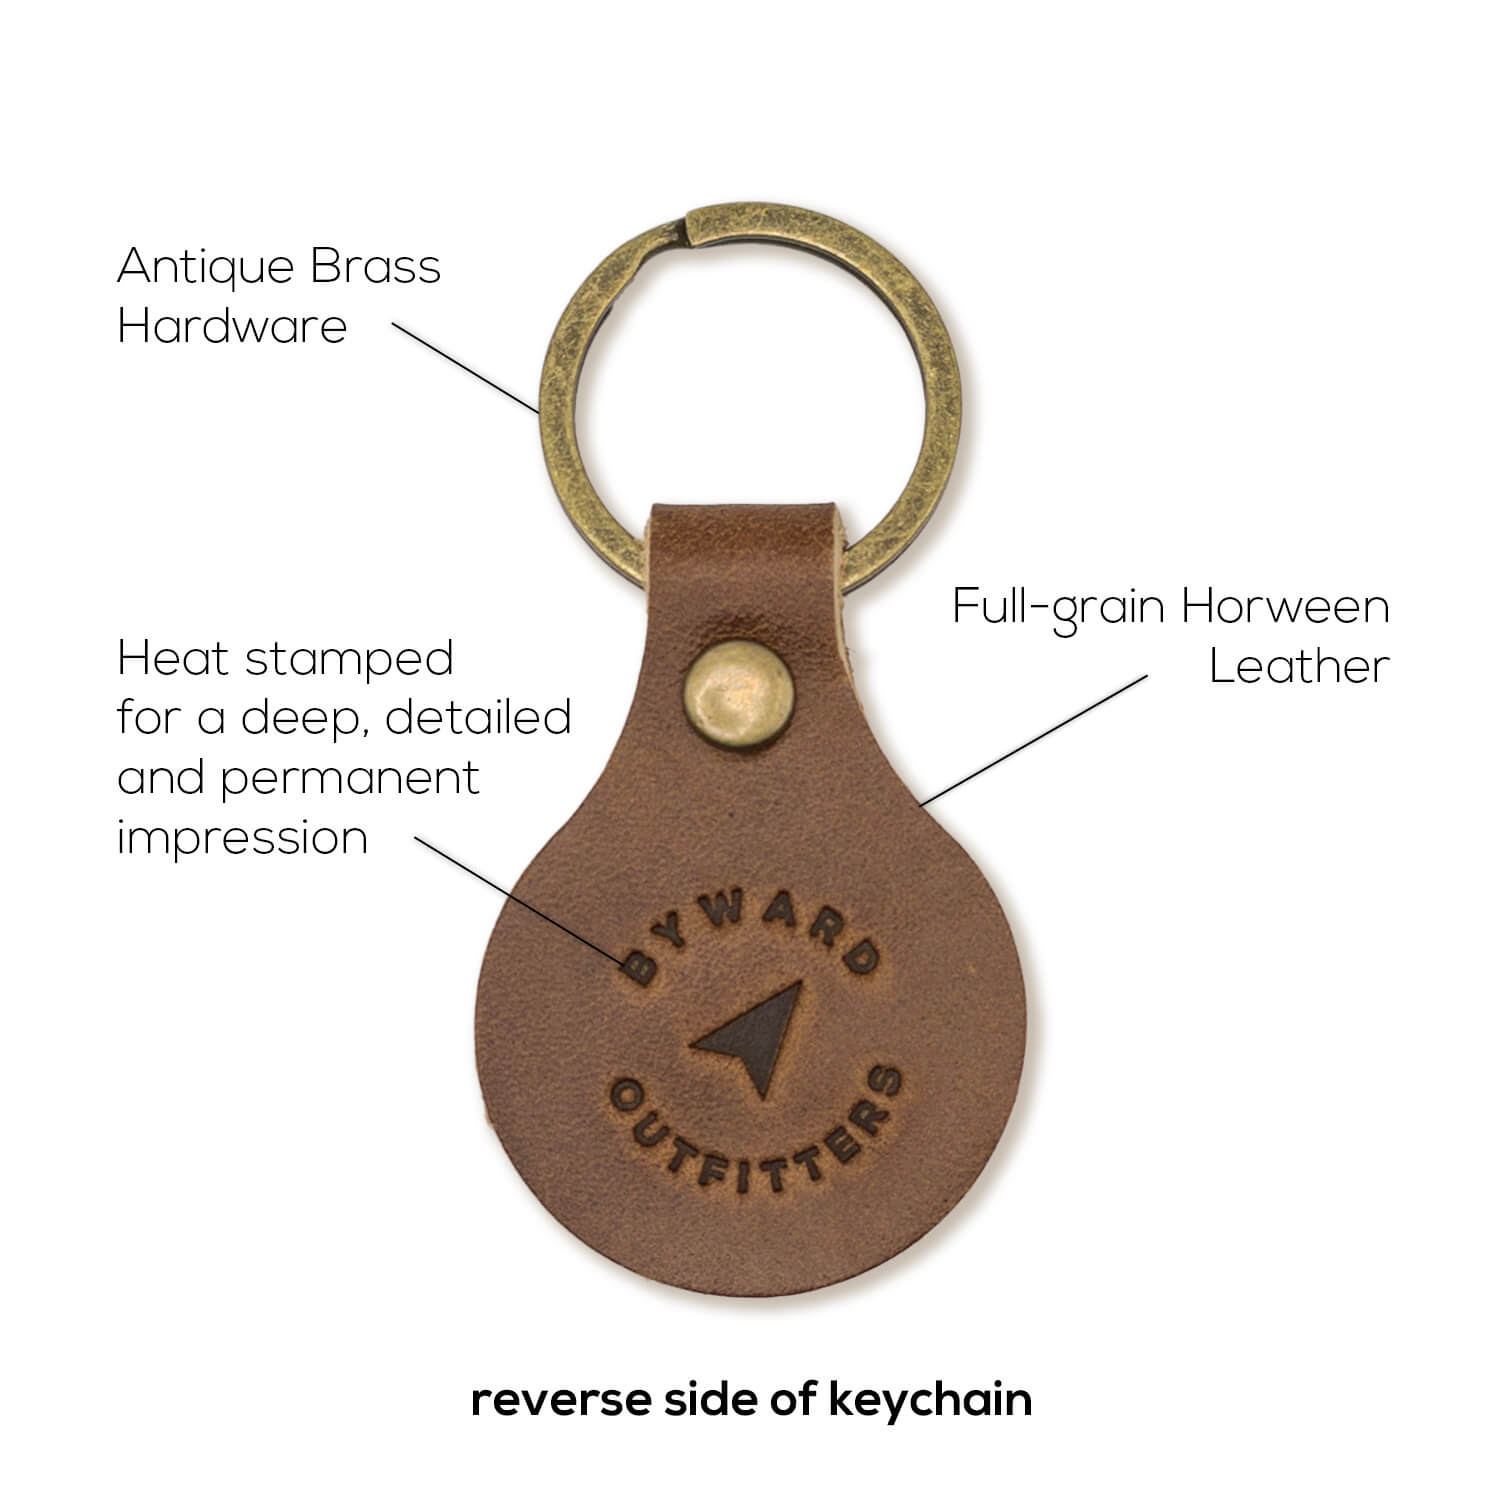 Maple Leaf - Leather Keychain